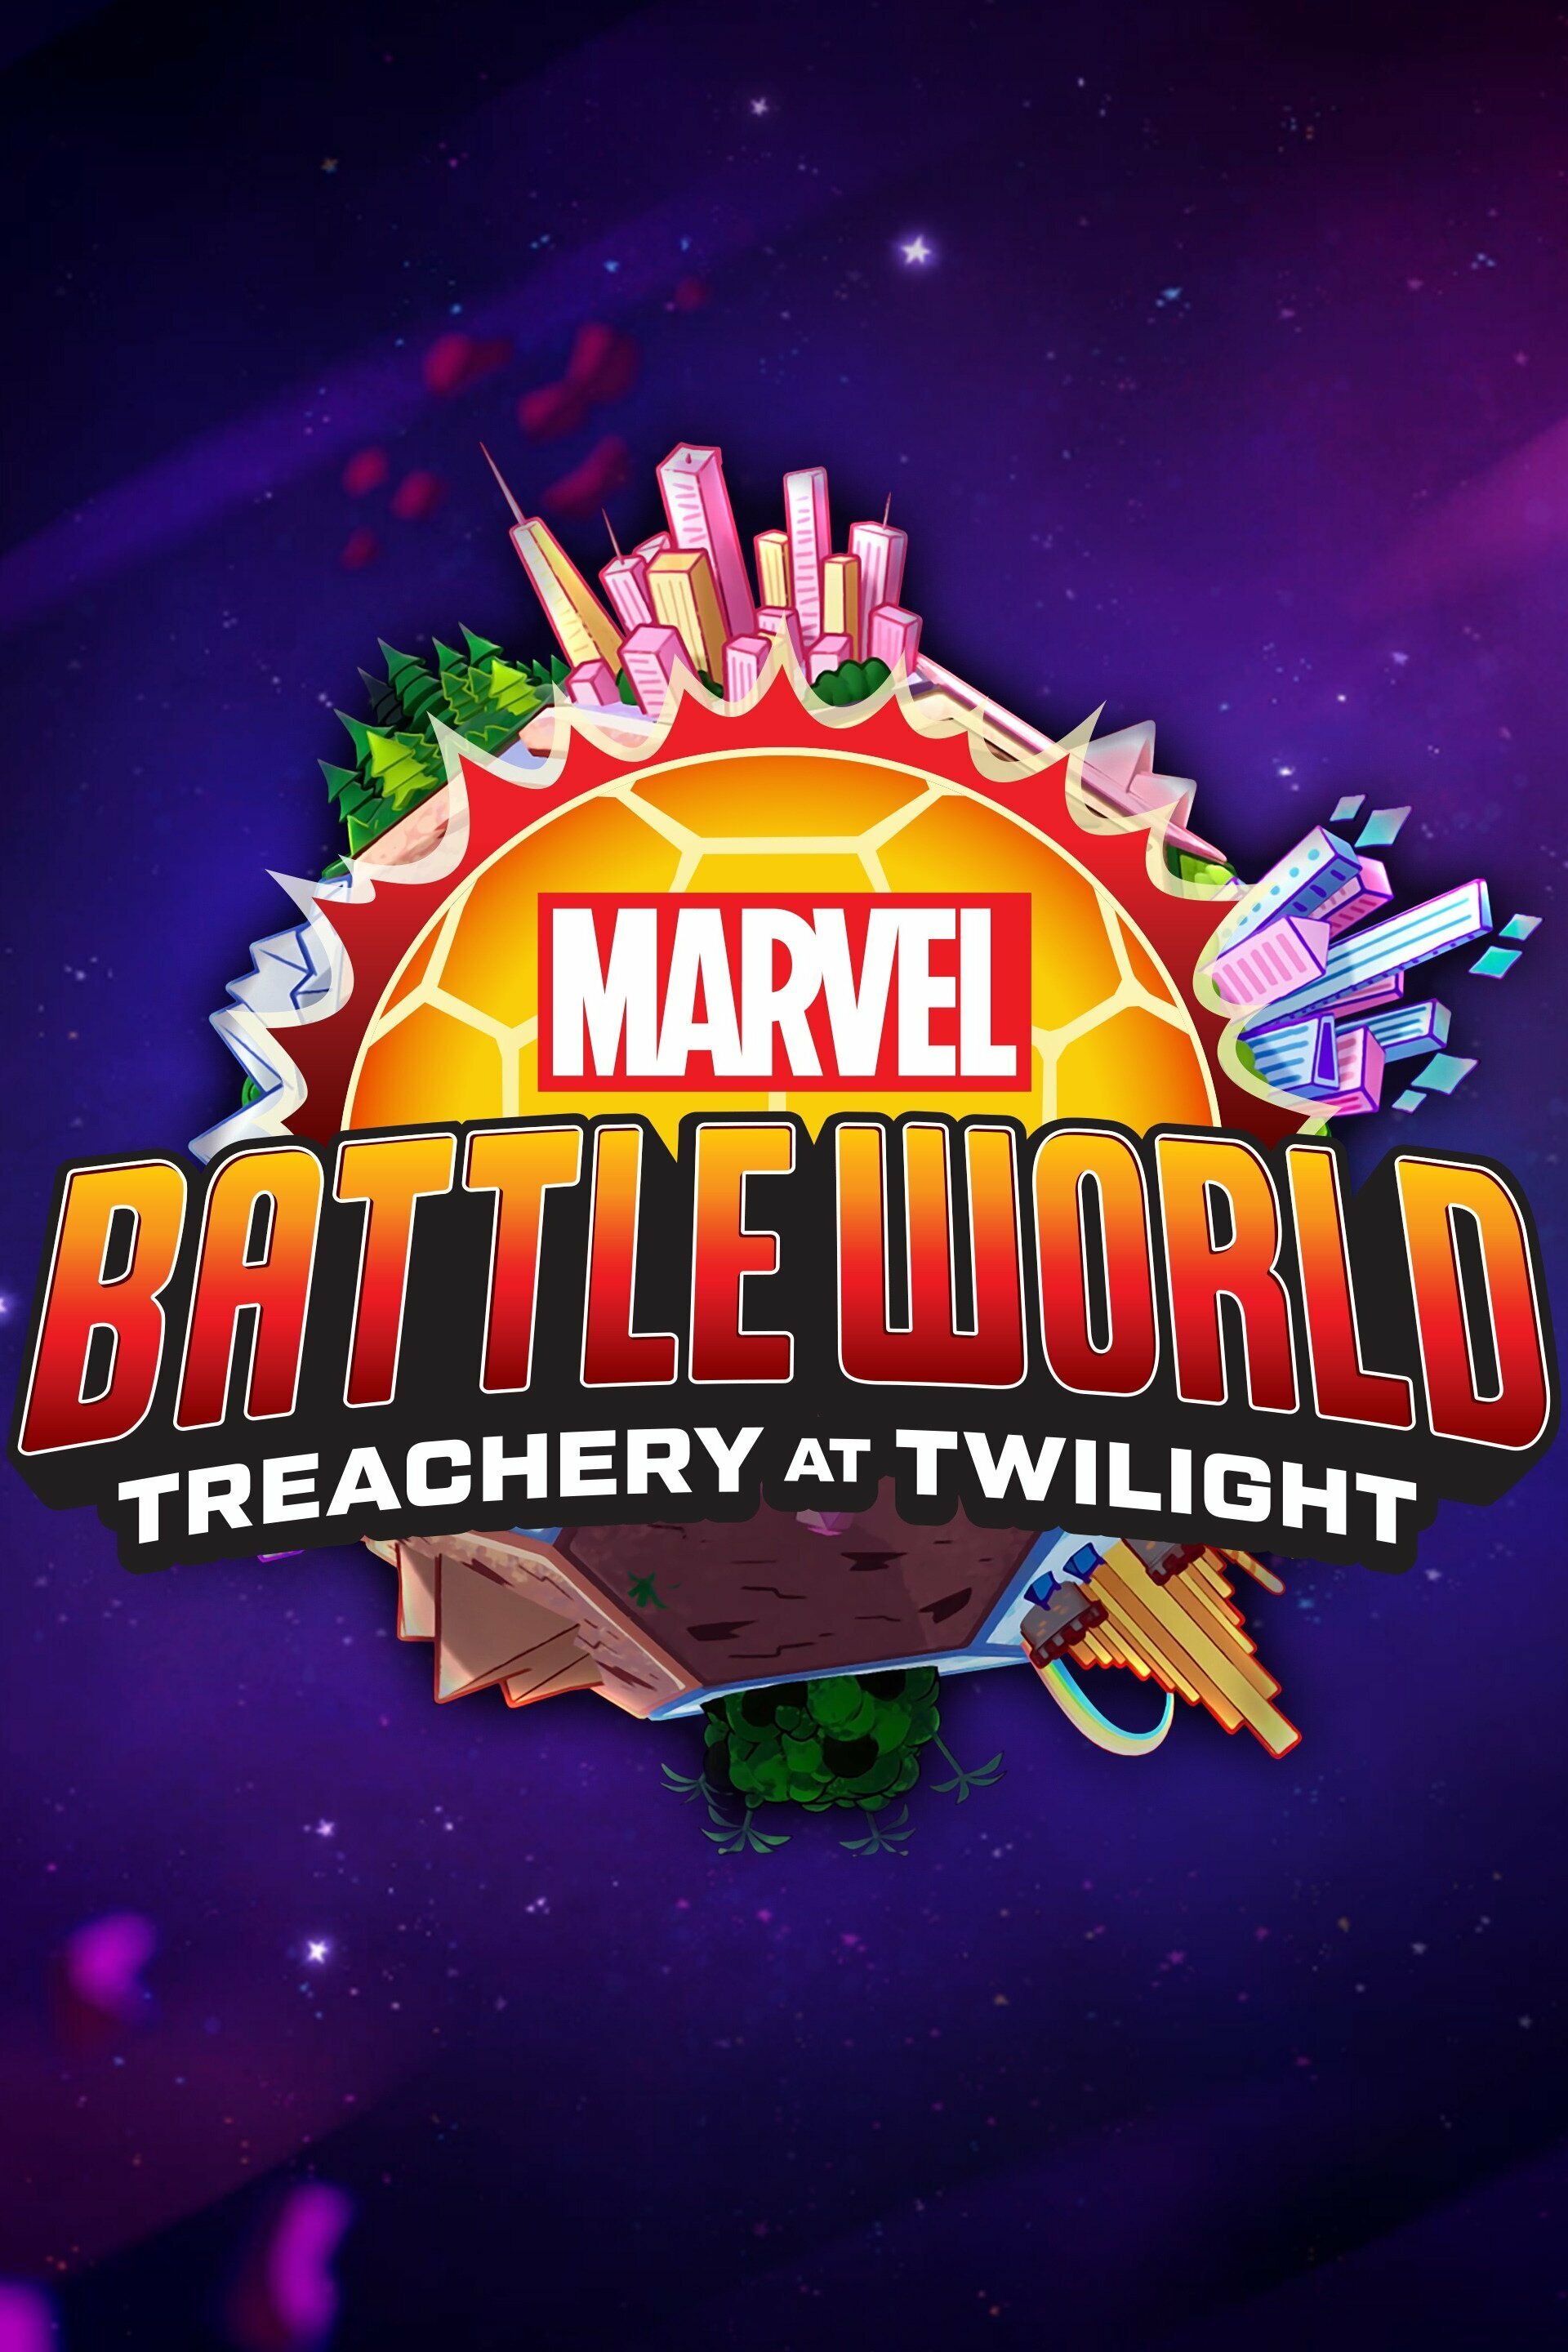 Marvel Battleworld: Treachery at Twilight ne zaman